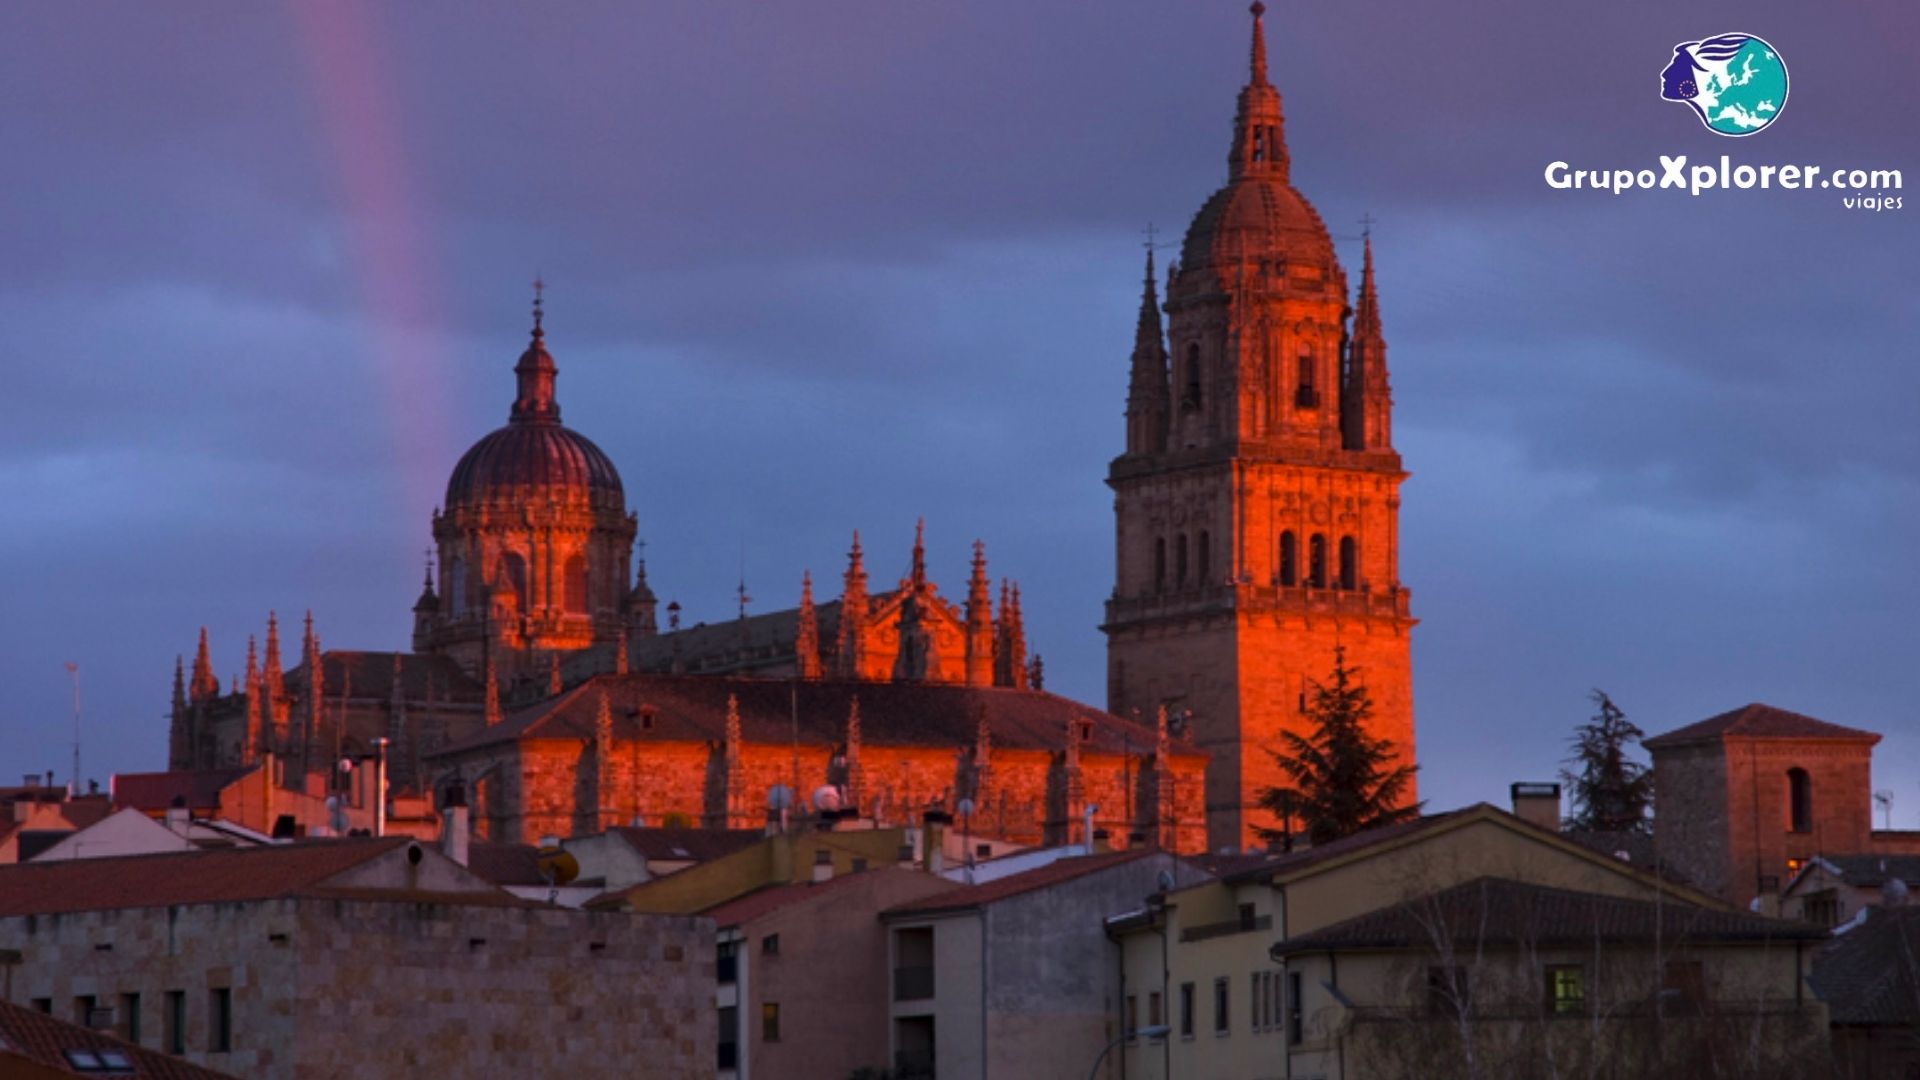 Salamanca Monumental